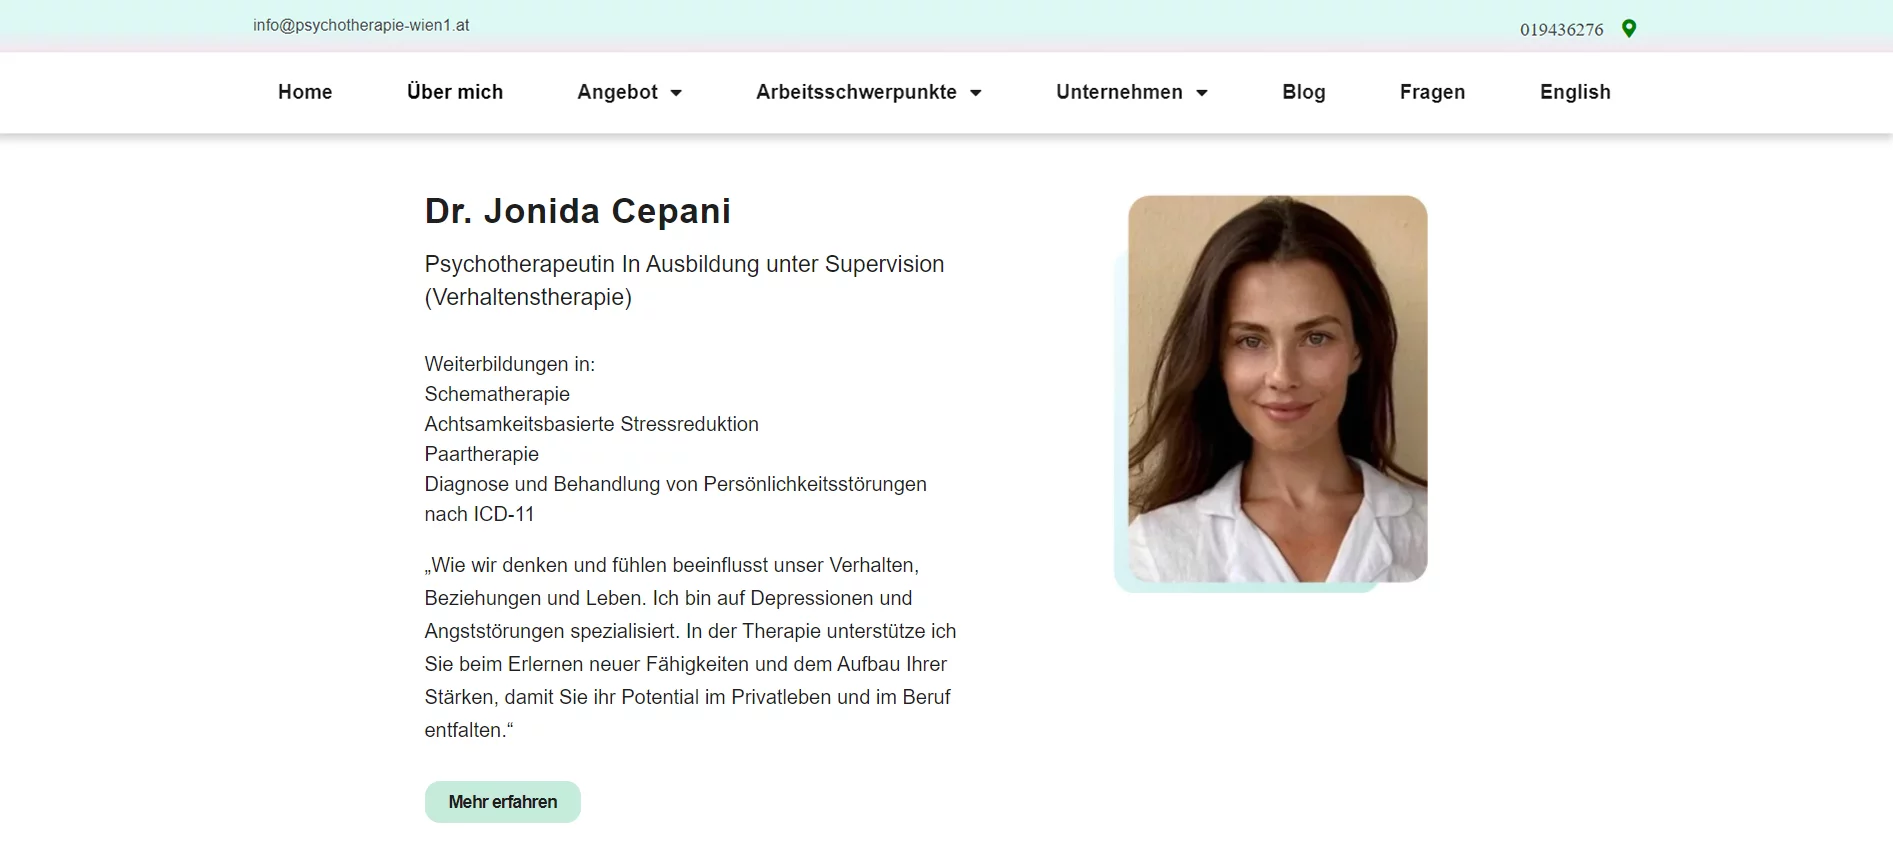 Psychotherapie Wien - Jonida Cepani